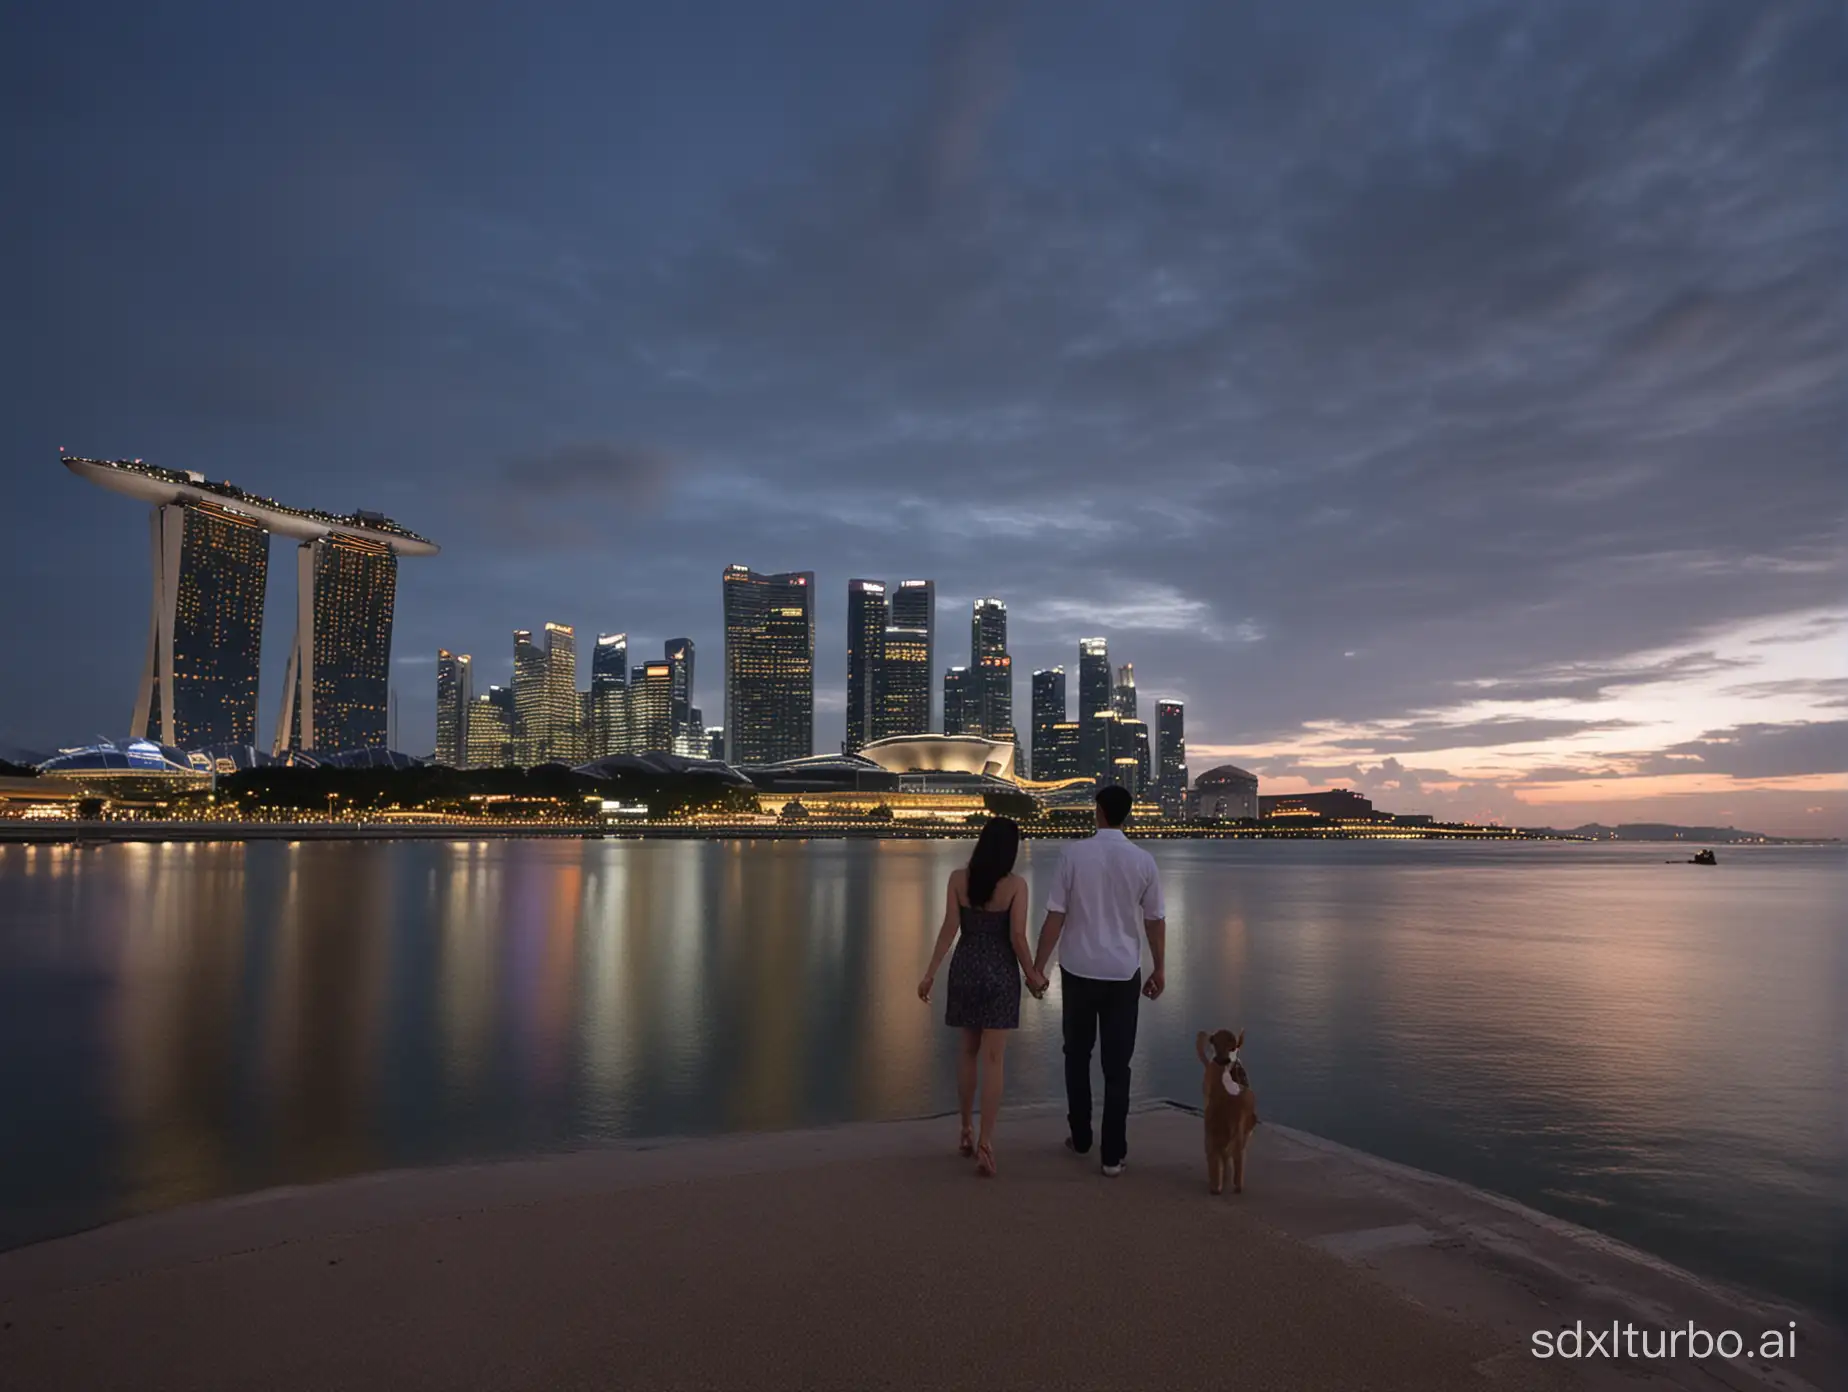 Singapore-Coastal-Cityscape-at-Dusk-with-a-Romantic-Couple